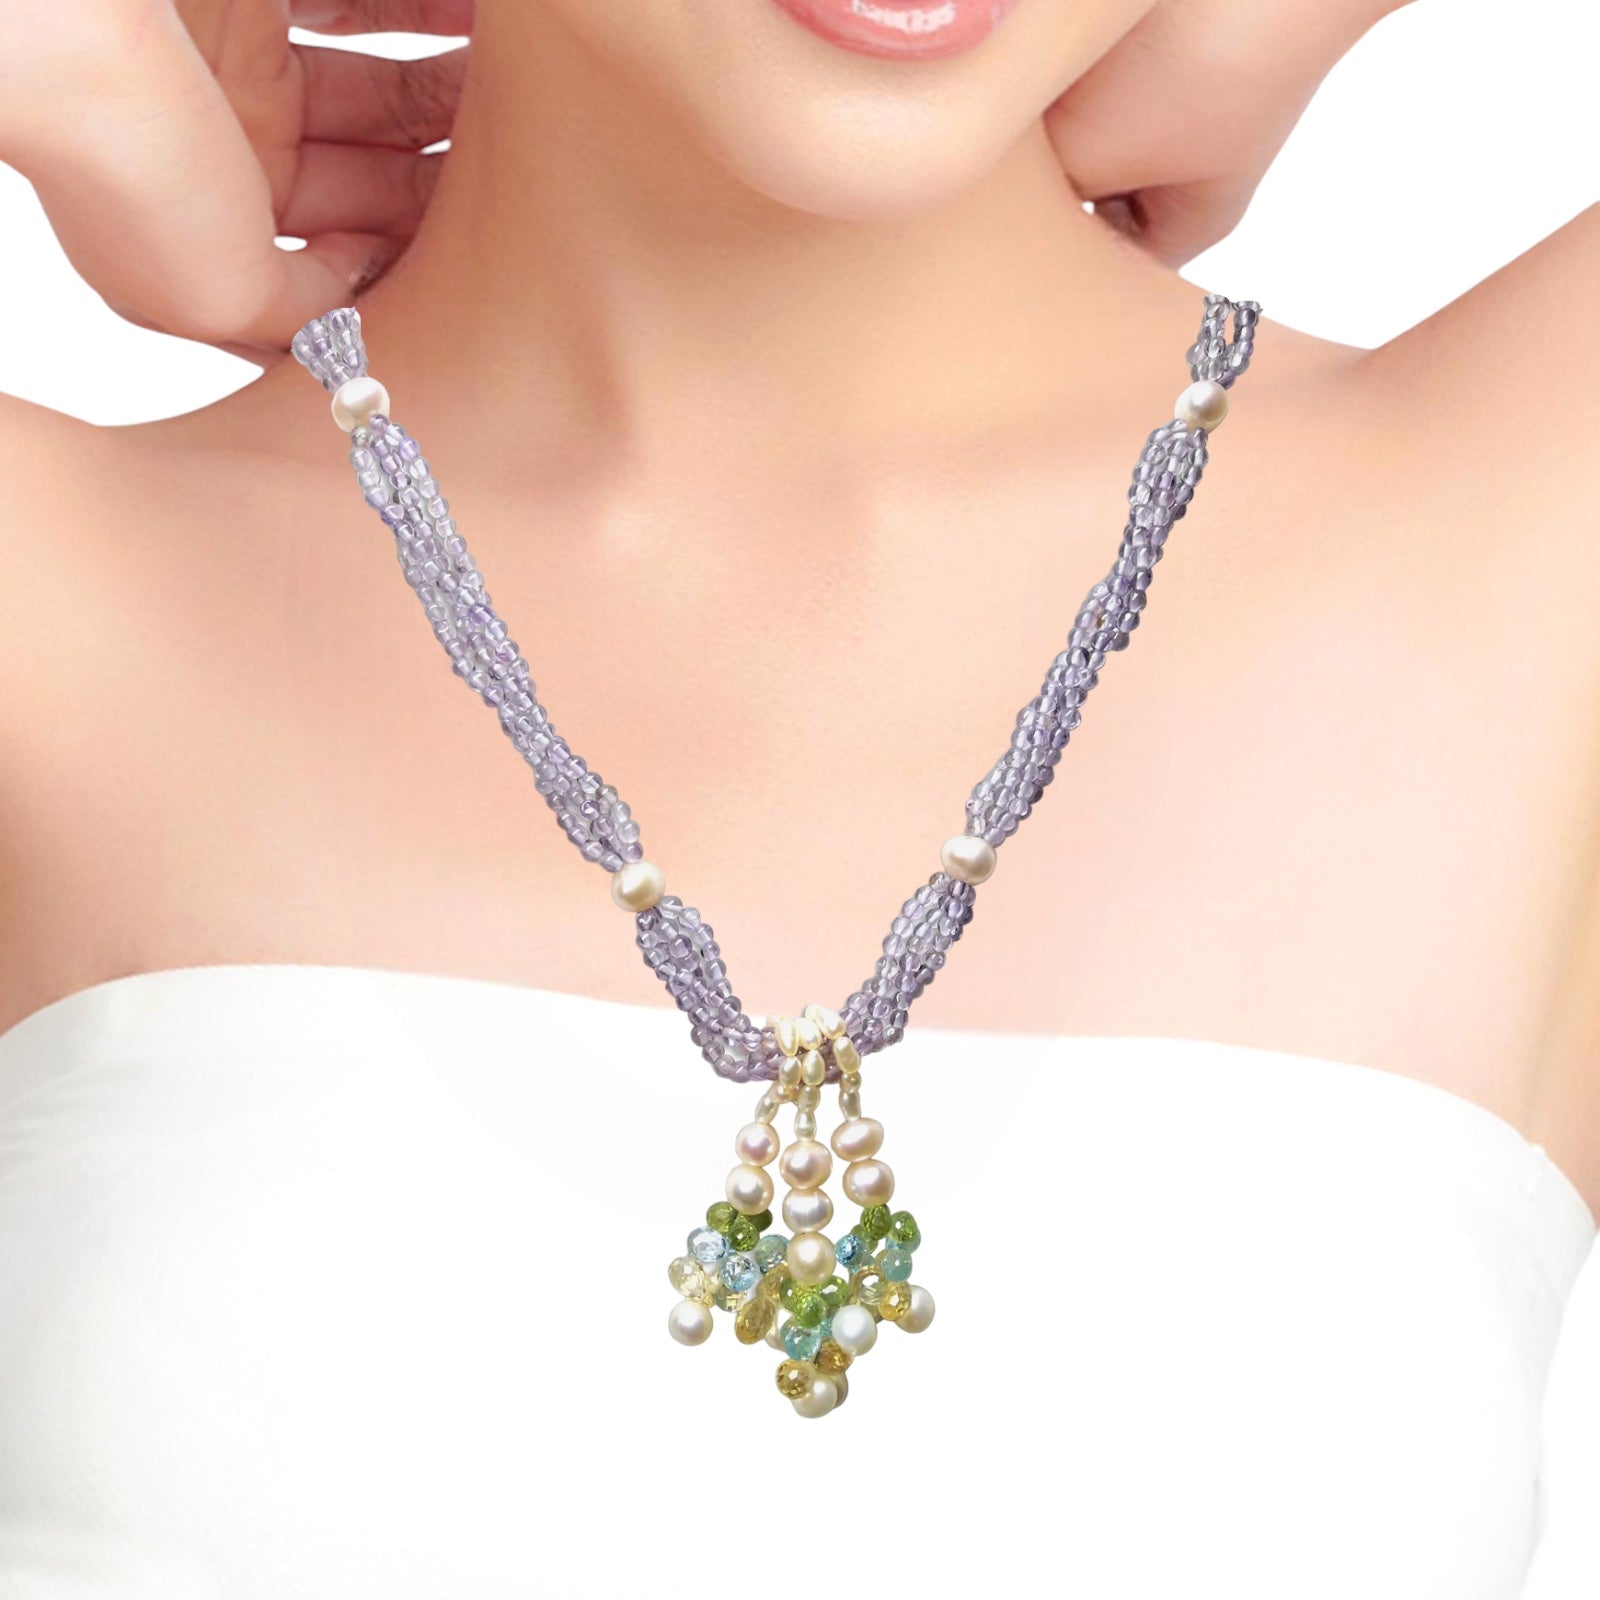 Natural Handmade Necklace 16"-18" Amethyst, Peridot, Citrine, Pearls Gemstone Beads Jewelry